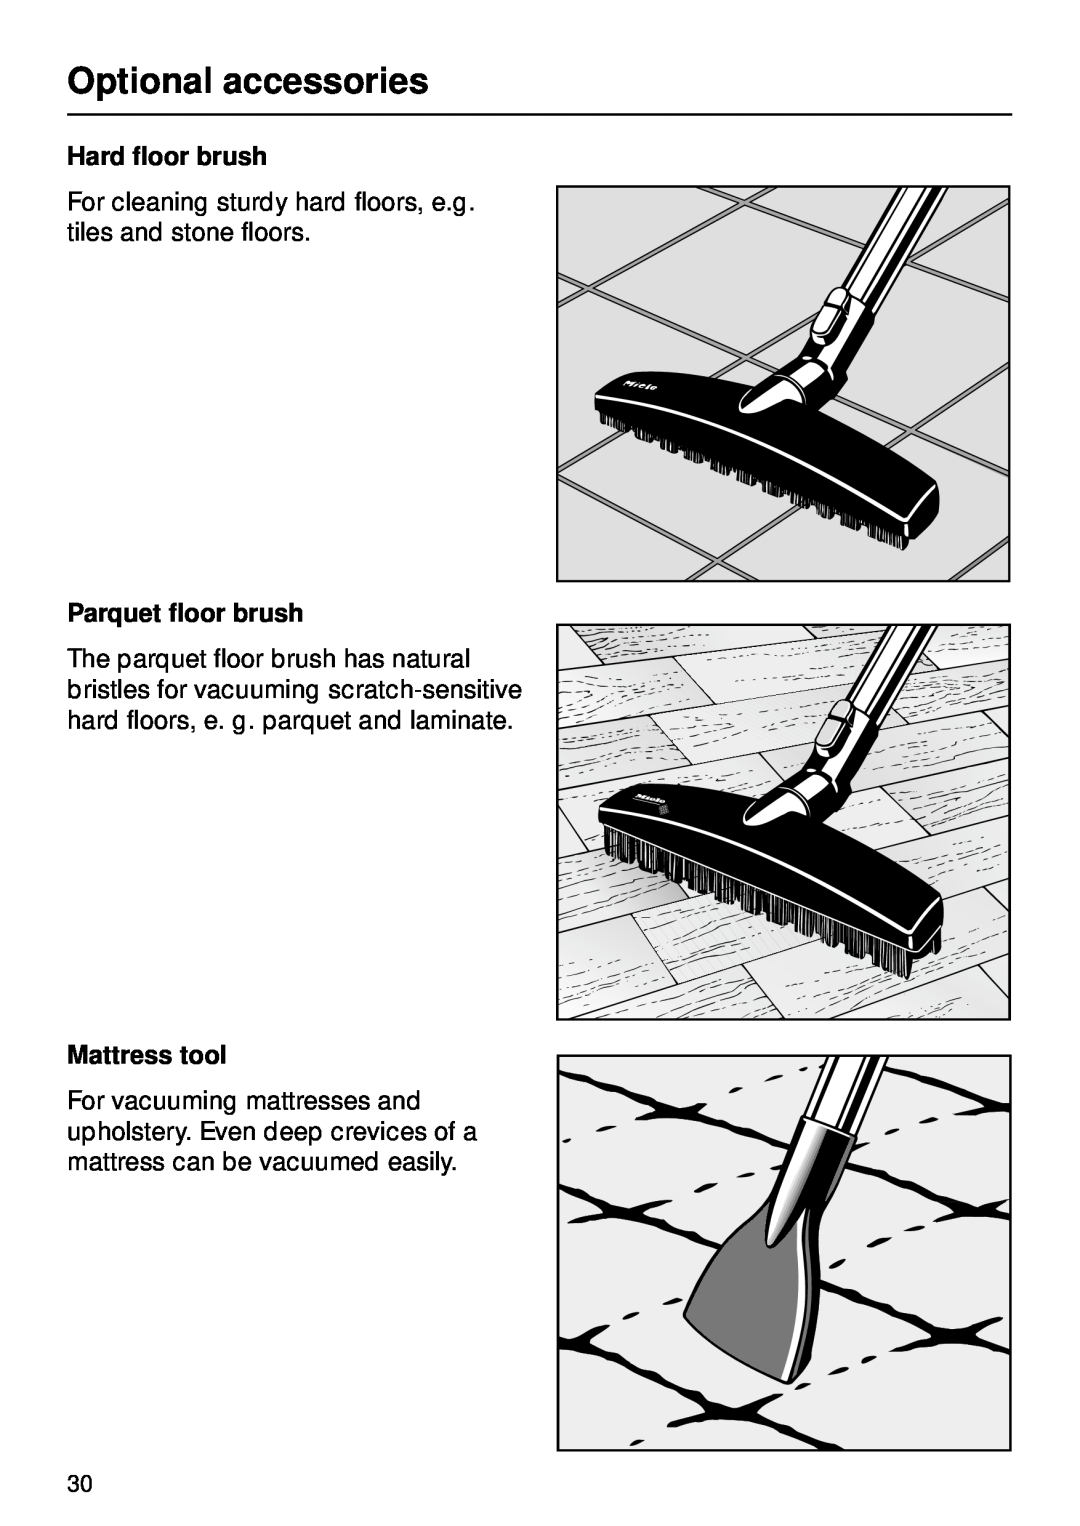 Miele S 252i, S 246i manual Hard floor brush, Parquet floor brush, Mattress tool, Optional accessories 